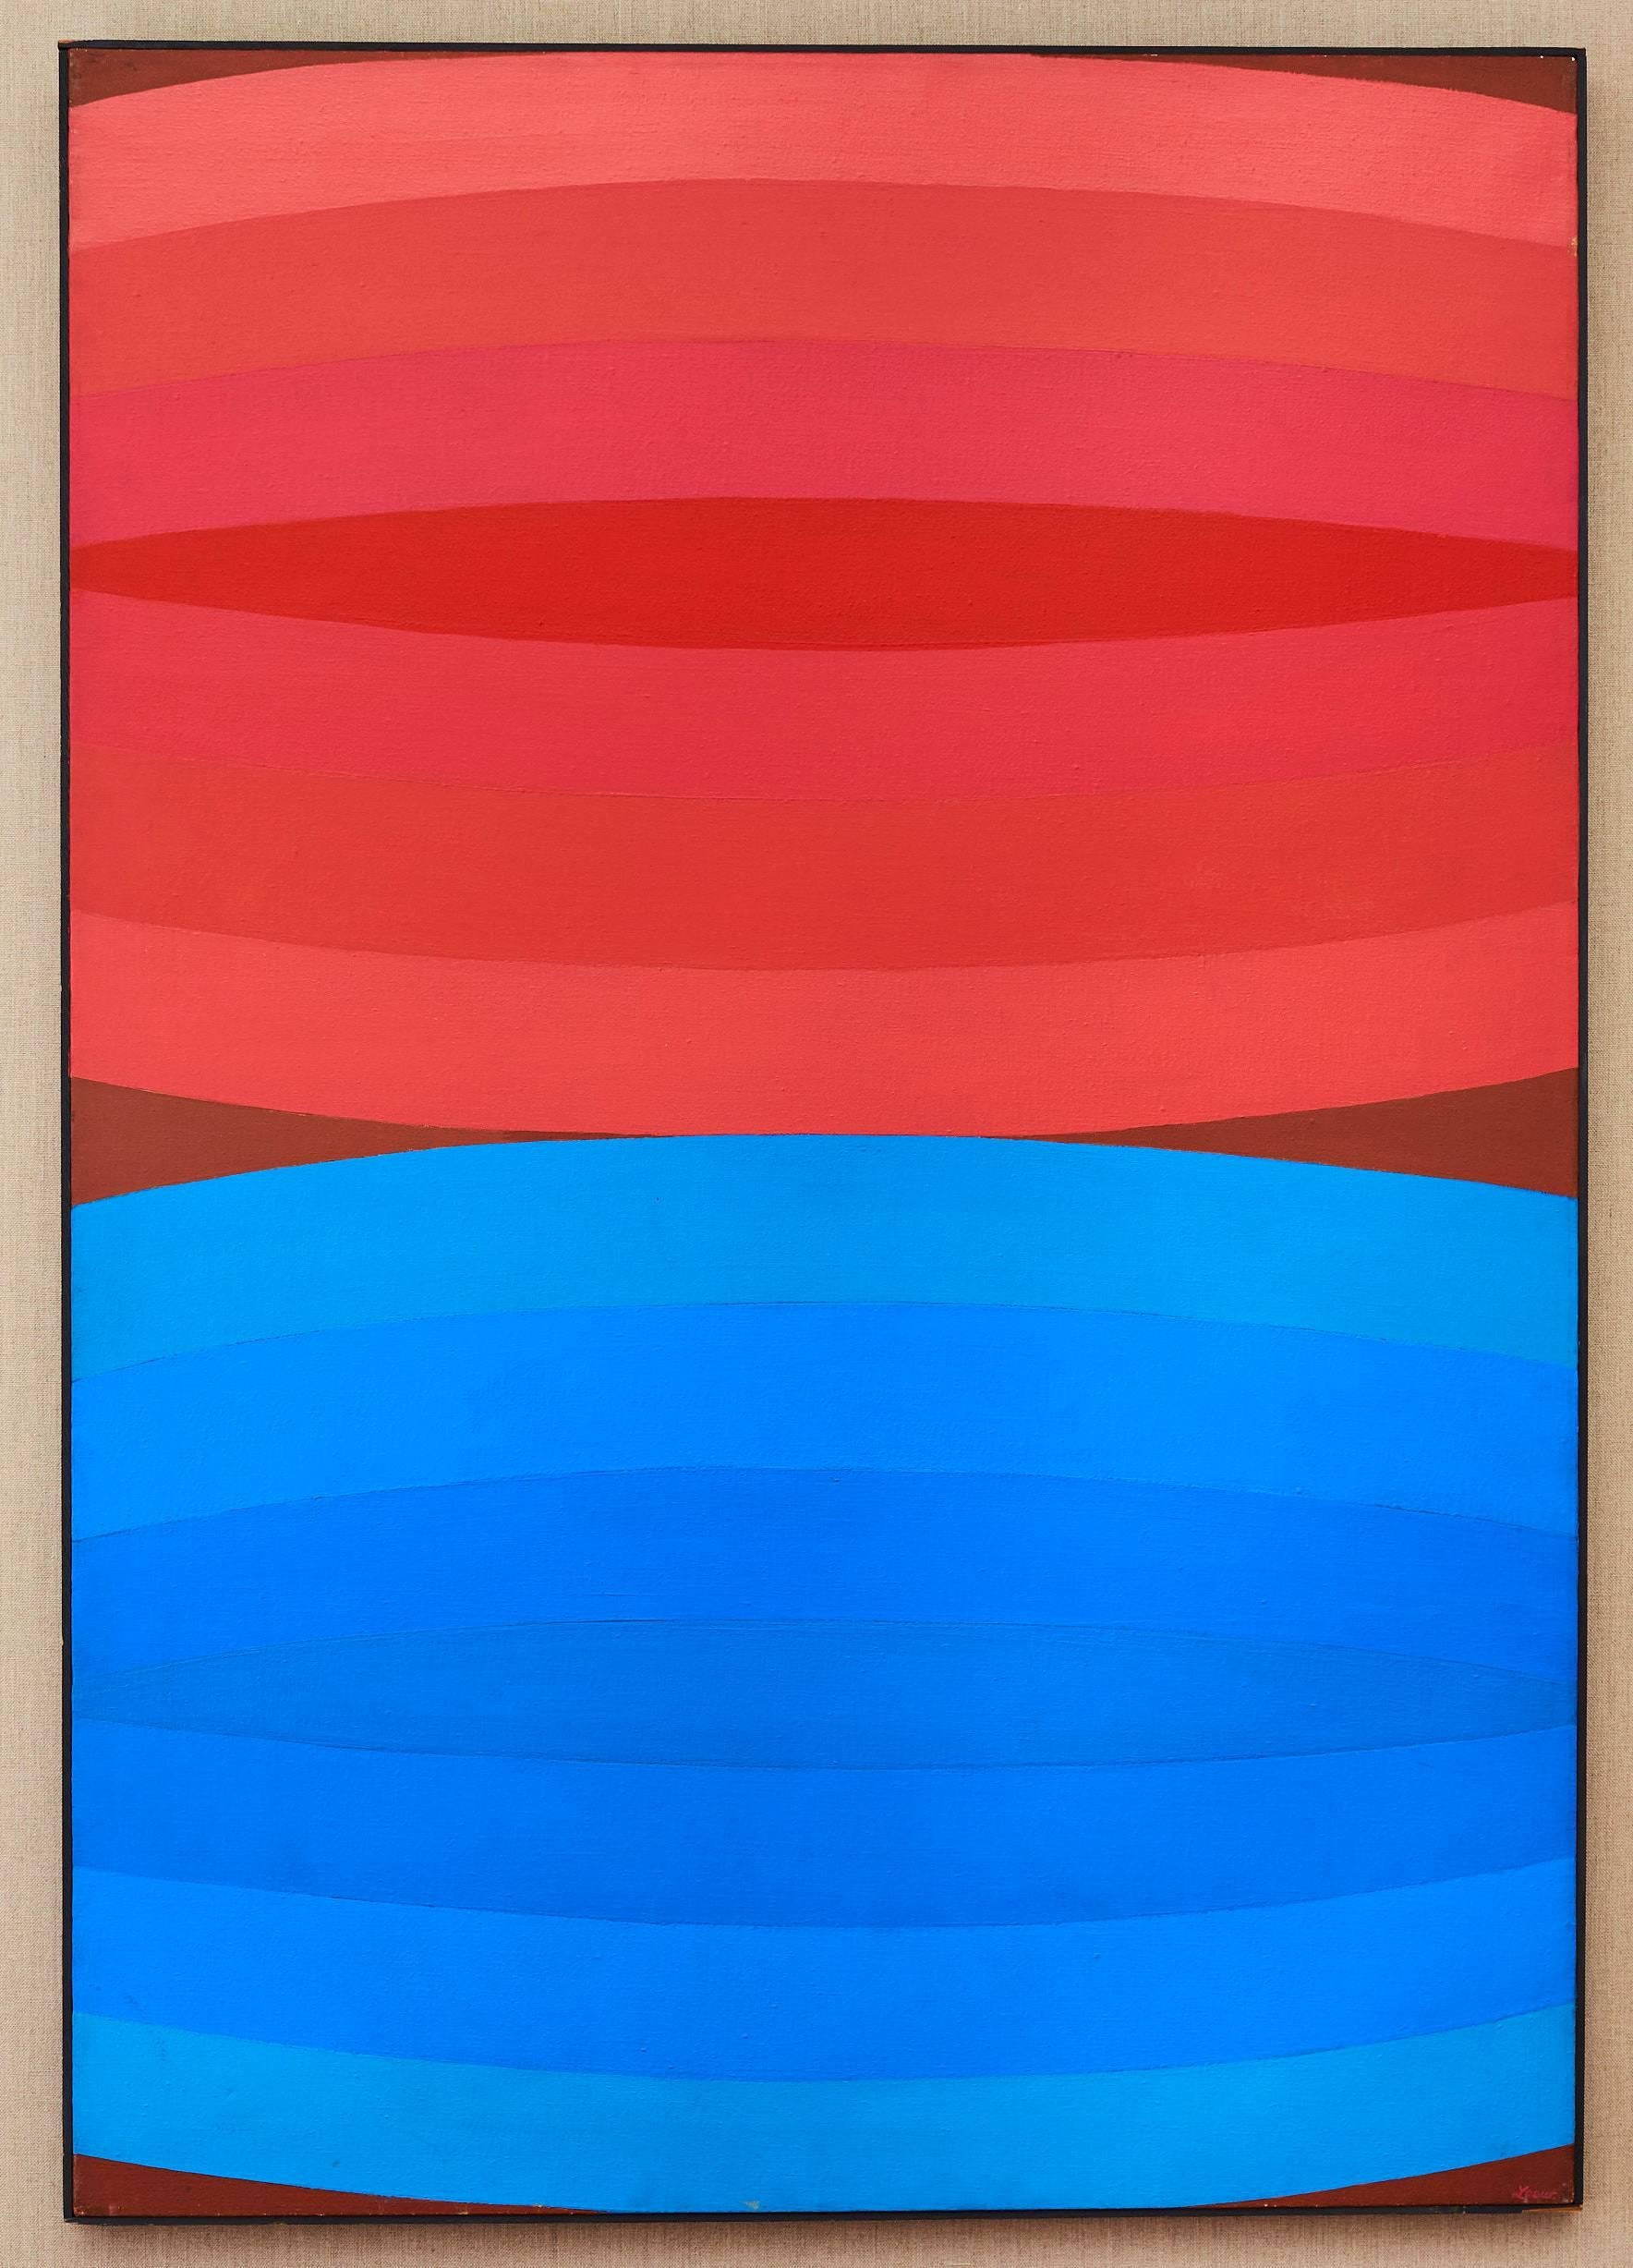 Rotes und oberblaues Rot, 1966 – Painting von Michael Loew